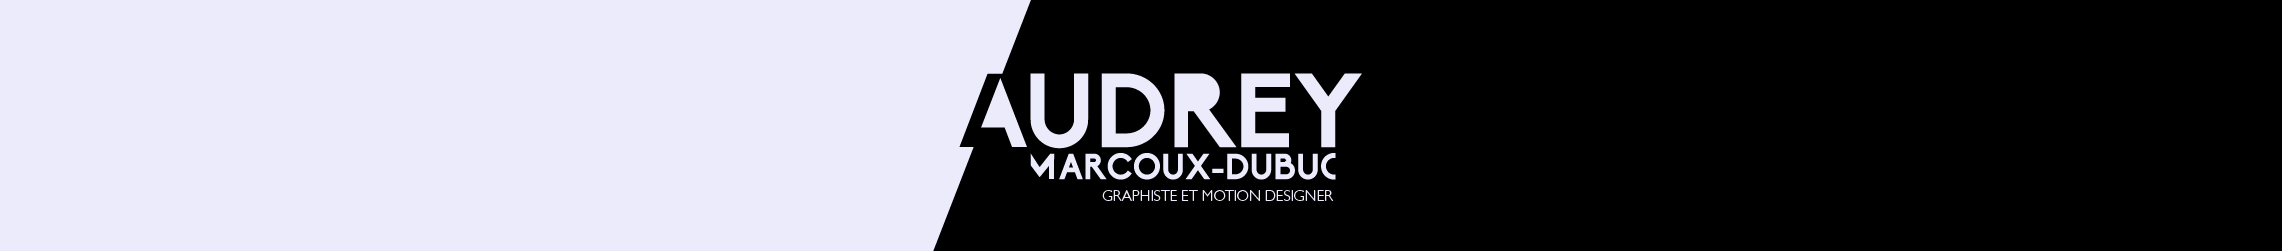 Profil-Banner von Audrey Marcoux-Dubuc